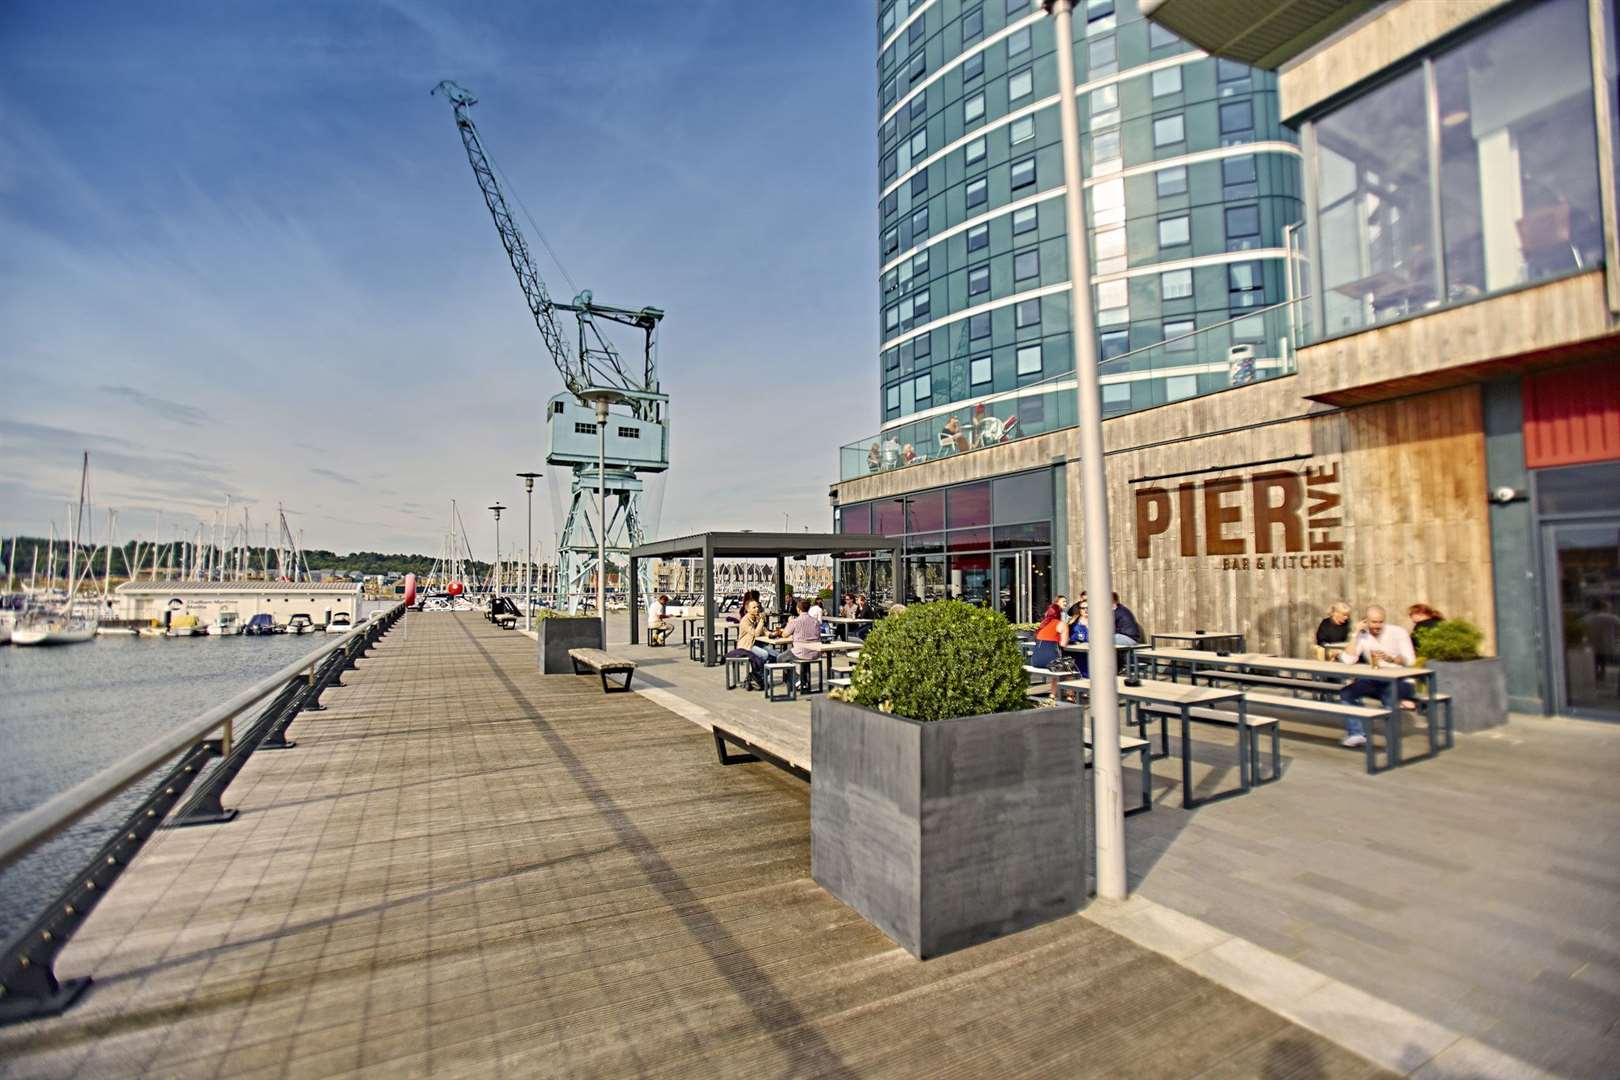 Pier Five at Chatham Dockside